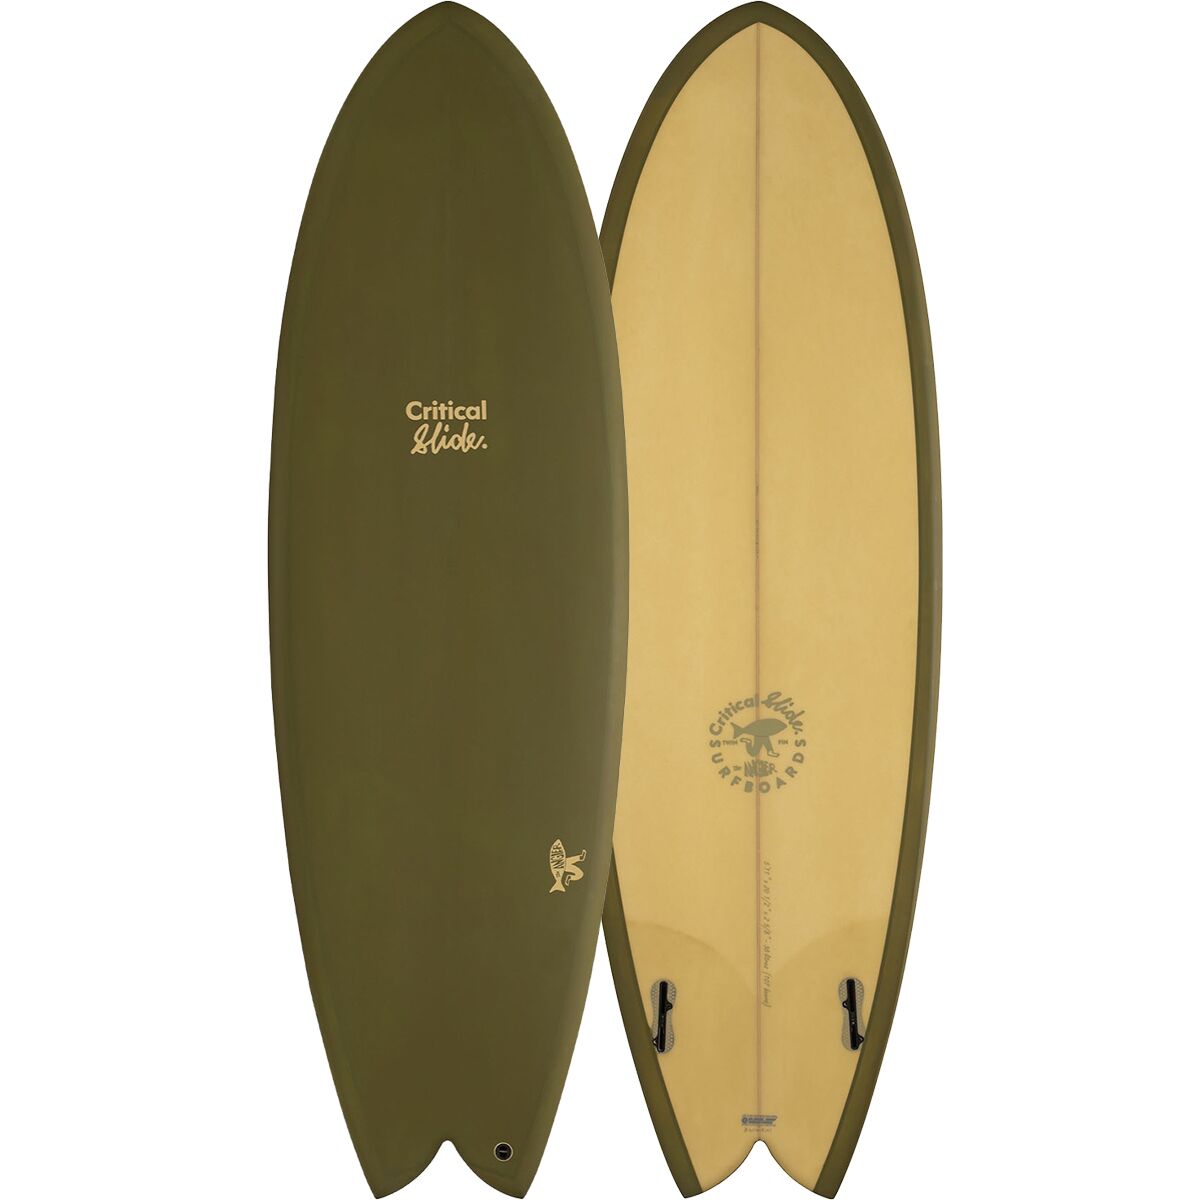 The Critical Slide Society Angler Shortboard Surfboard